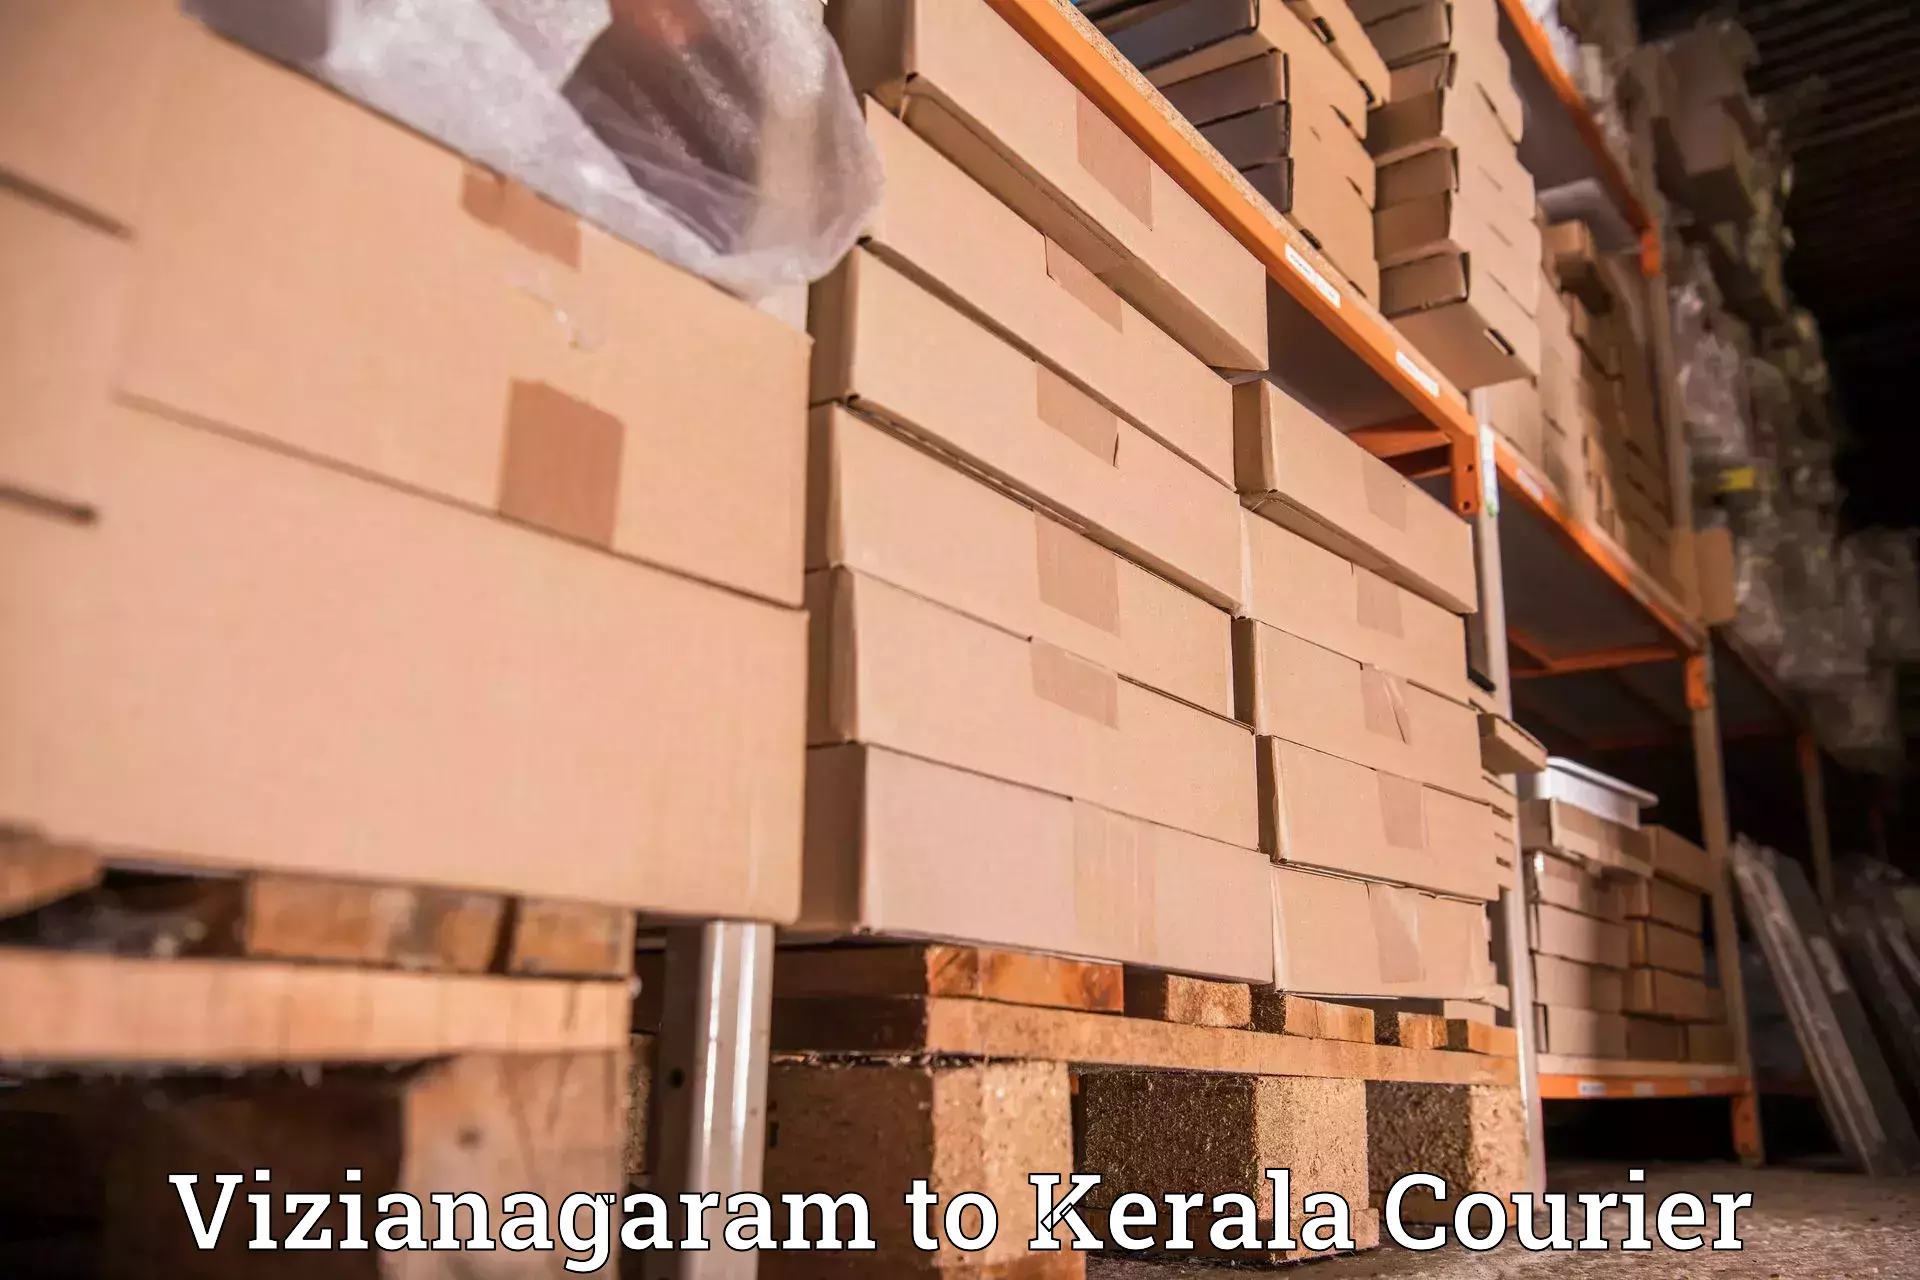 Supply chain efficiency Vizianagaram to Kottarakkara